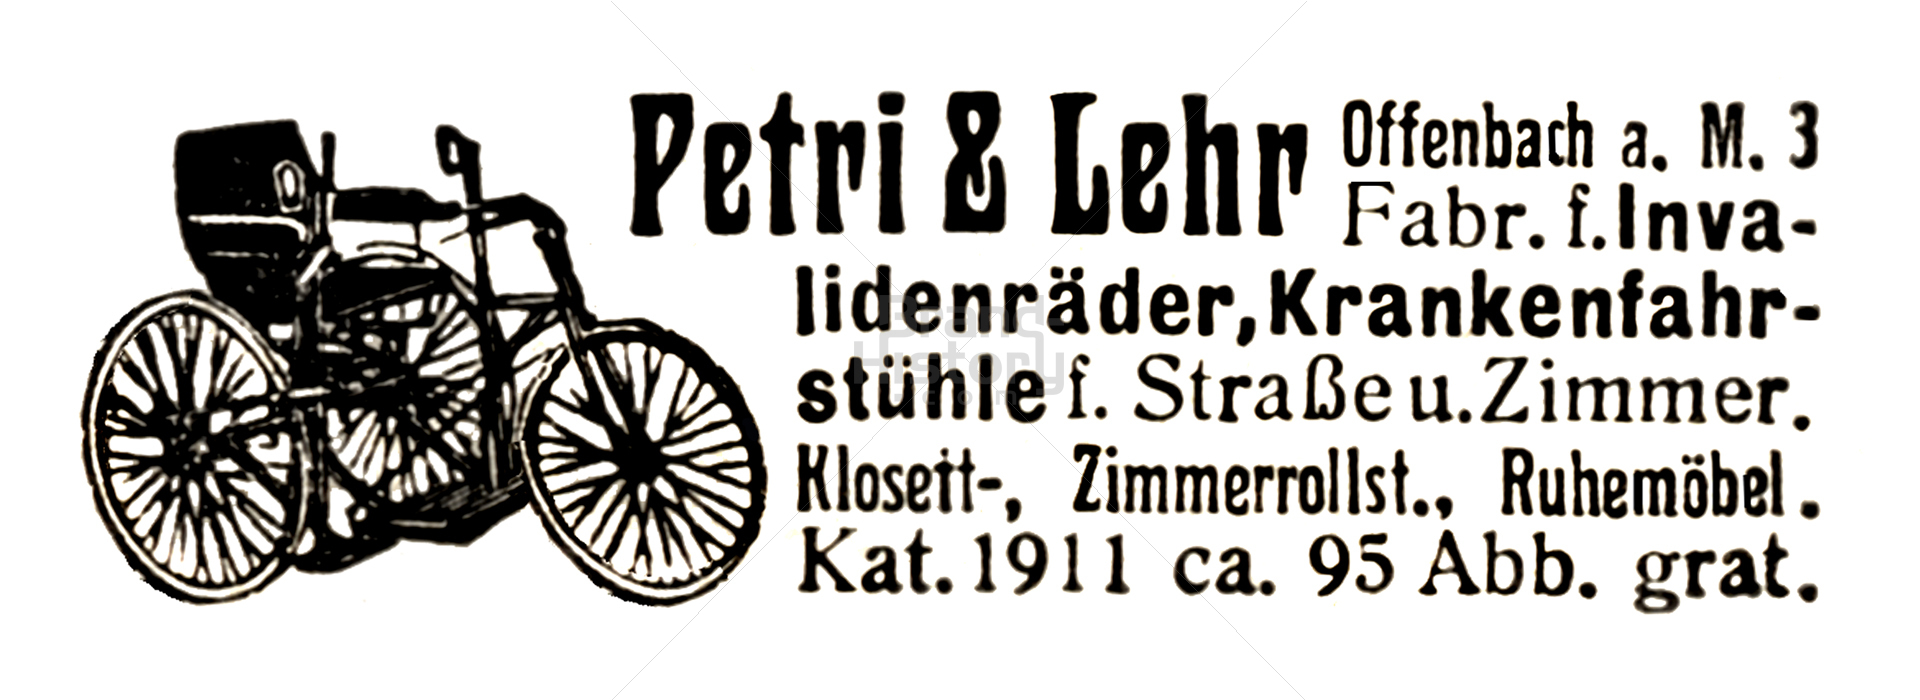 Petri & Lehr, Offenbach